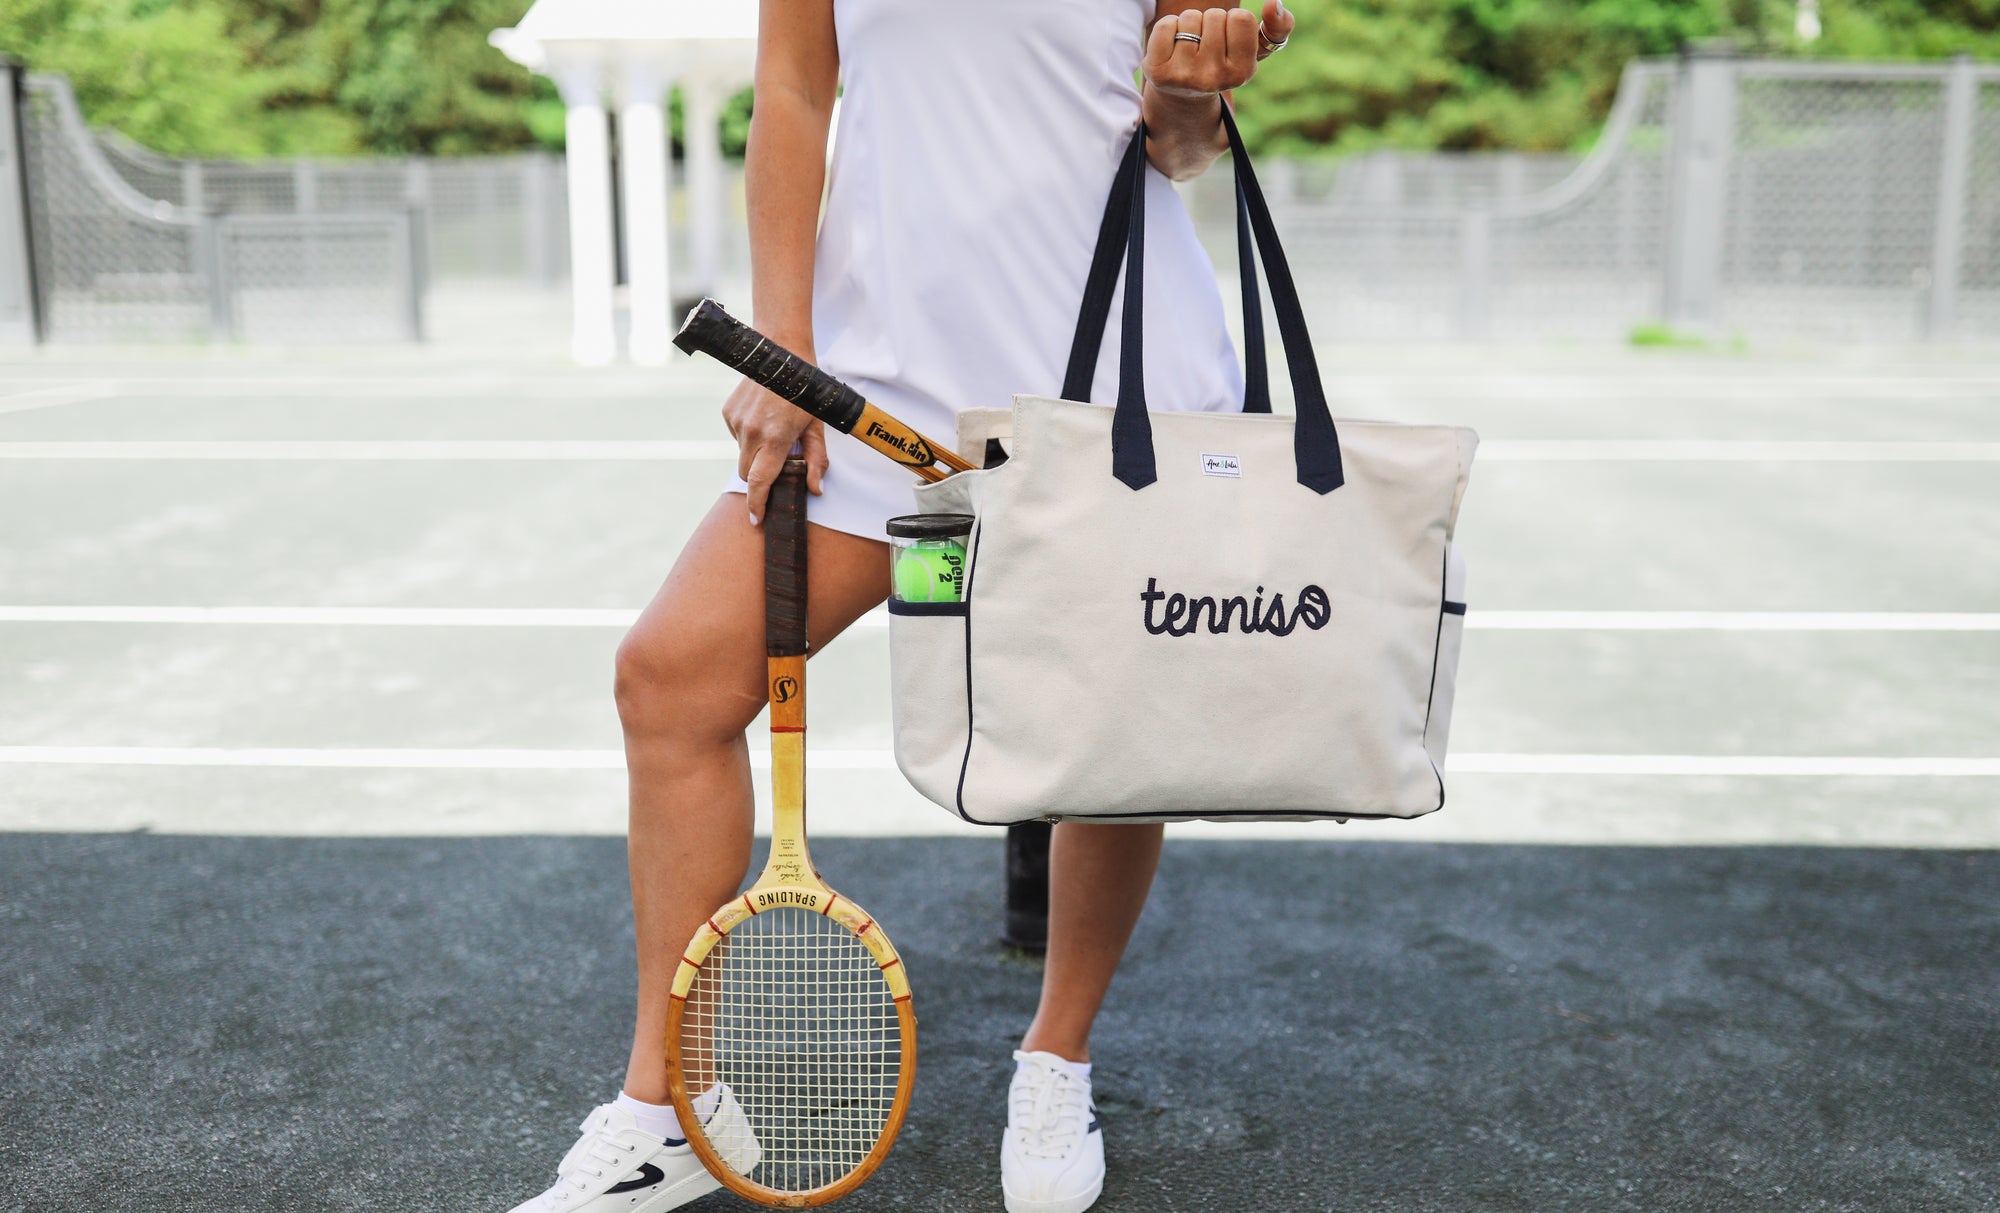 Ame & Lulu 3 Racquet Tennis Bag (Pink Grunge) 108.00